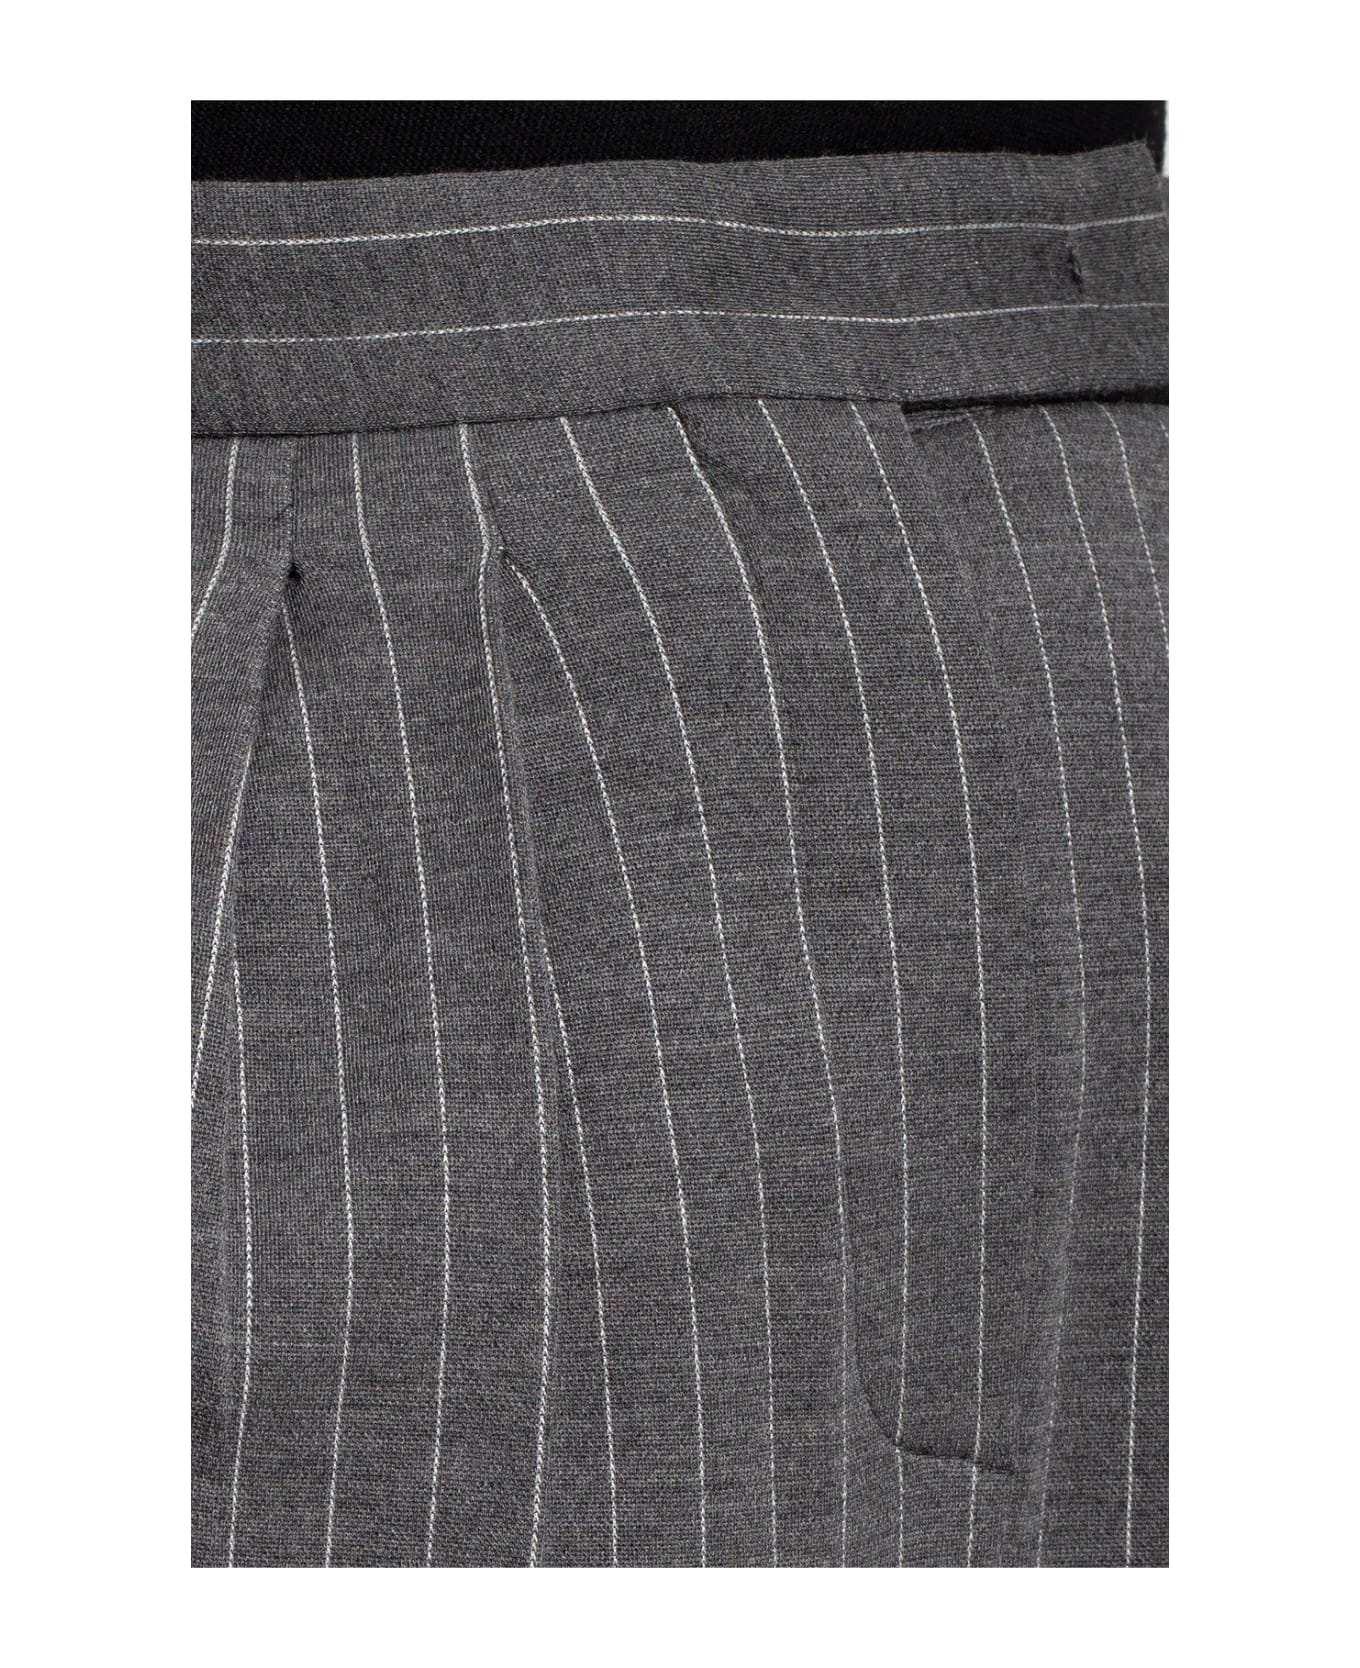 Max Mara Pinstriped Trousers - Medium grey ボトムス